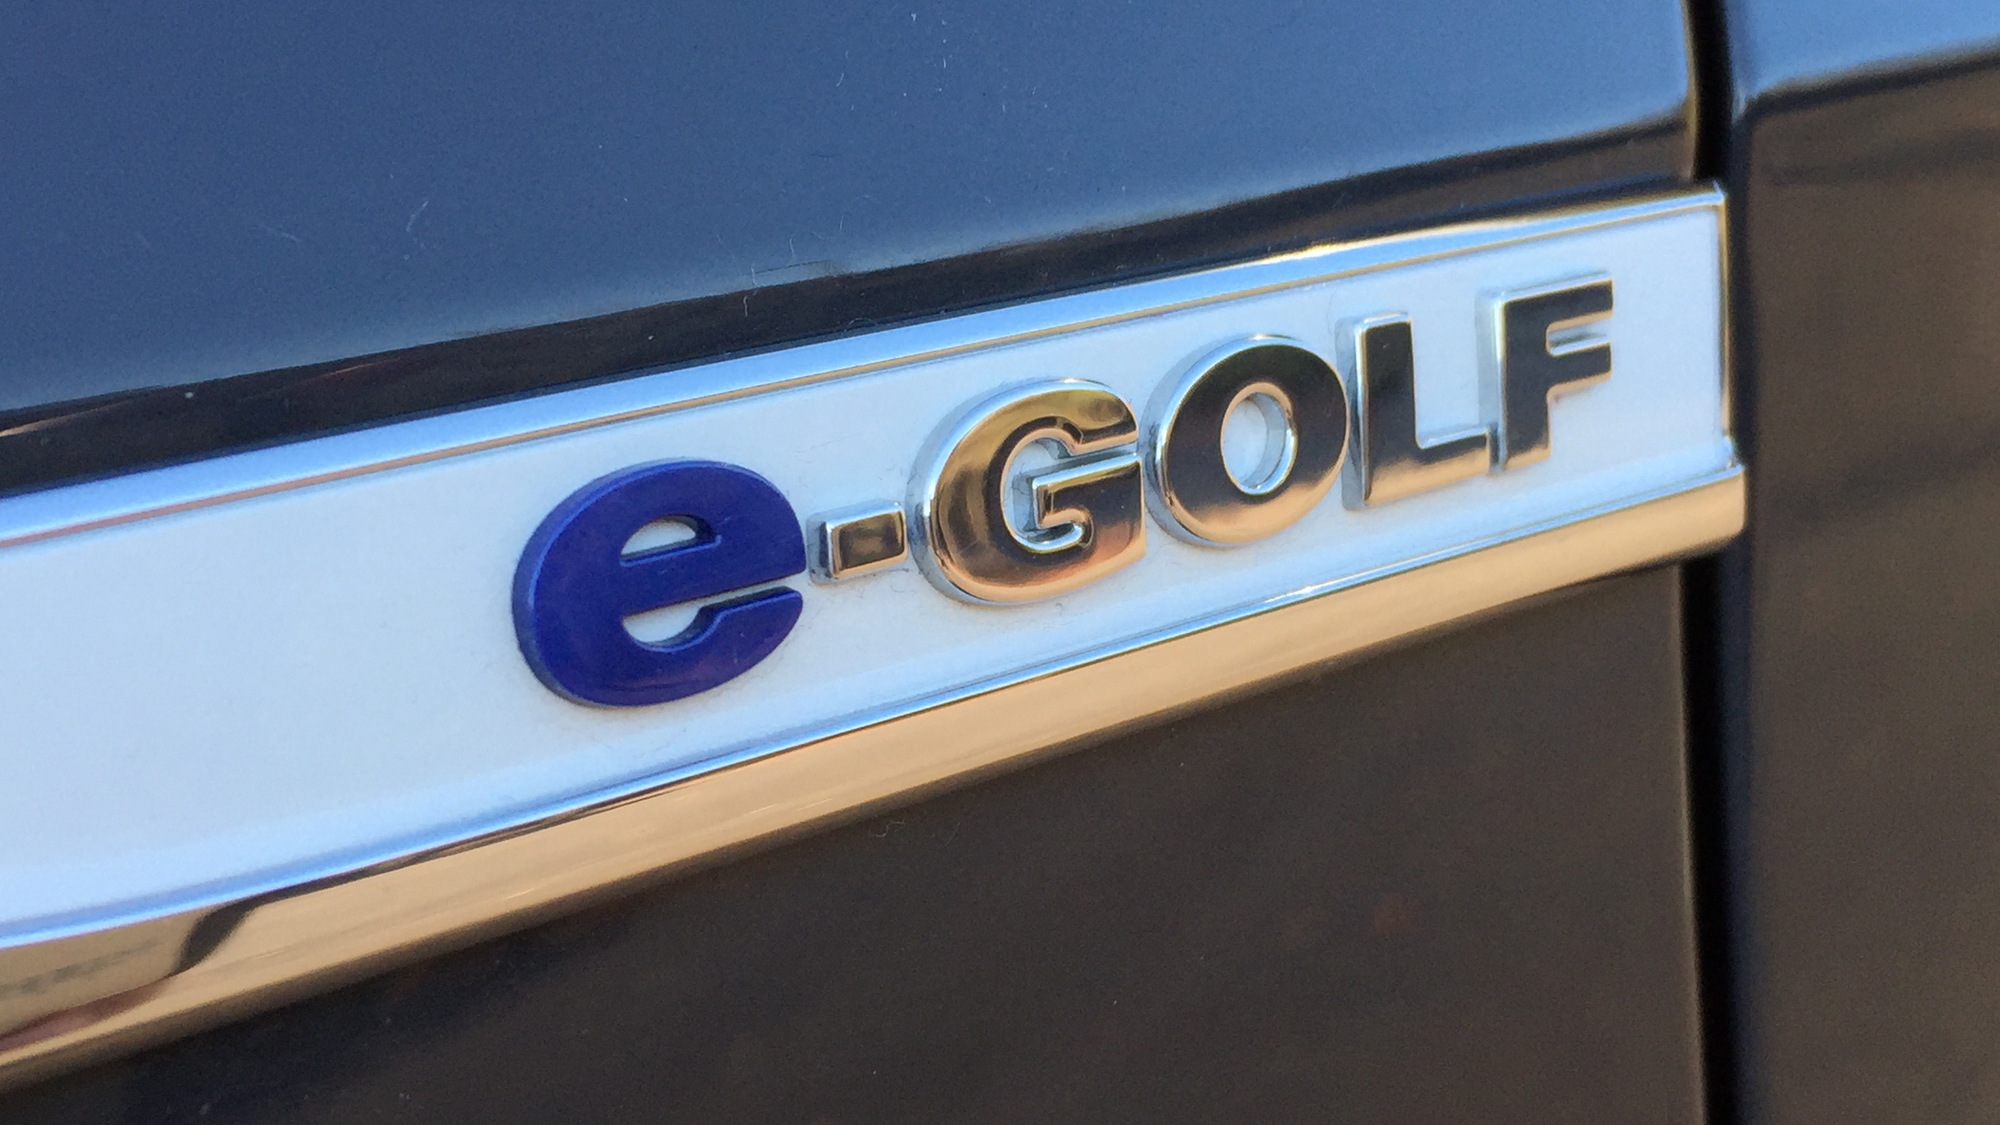 2015 Volkswagen e-Golf  -  Long-term test car  [November 2015]